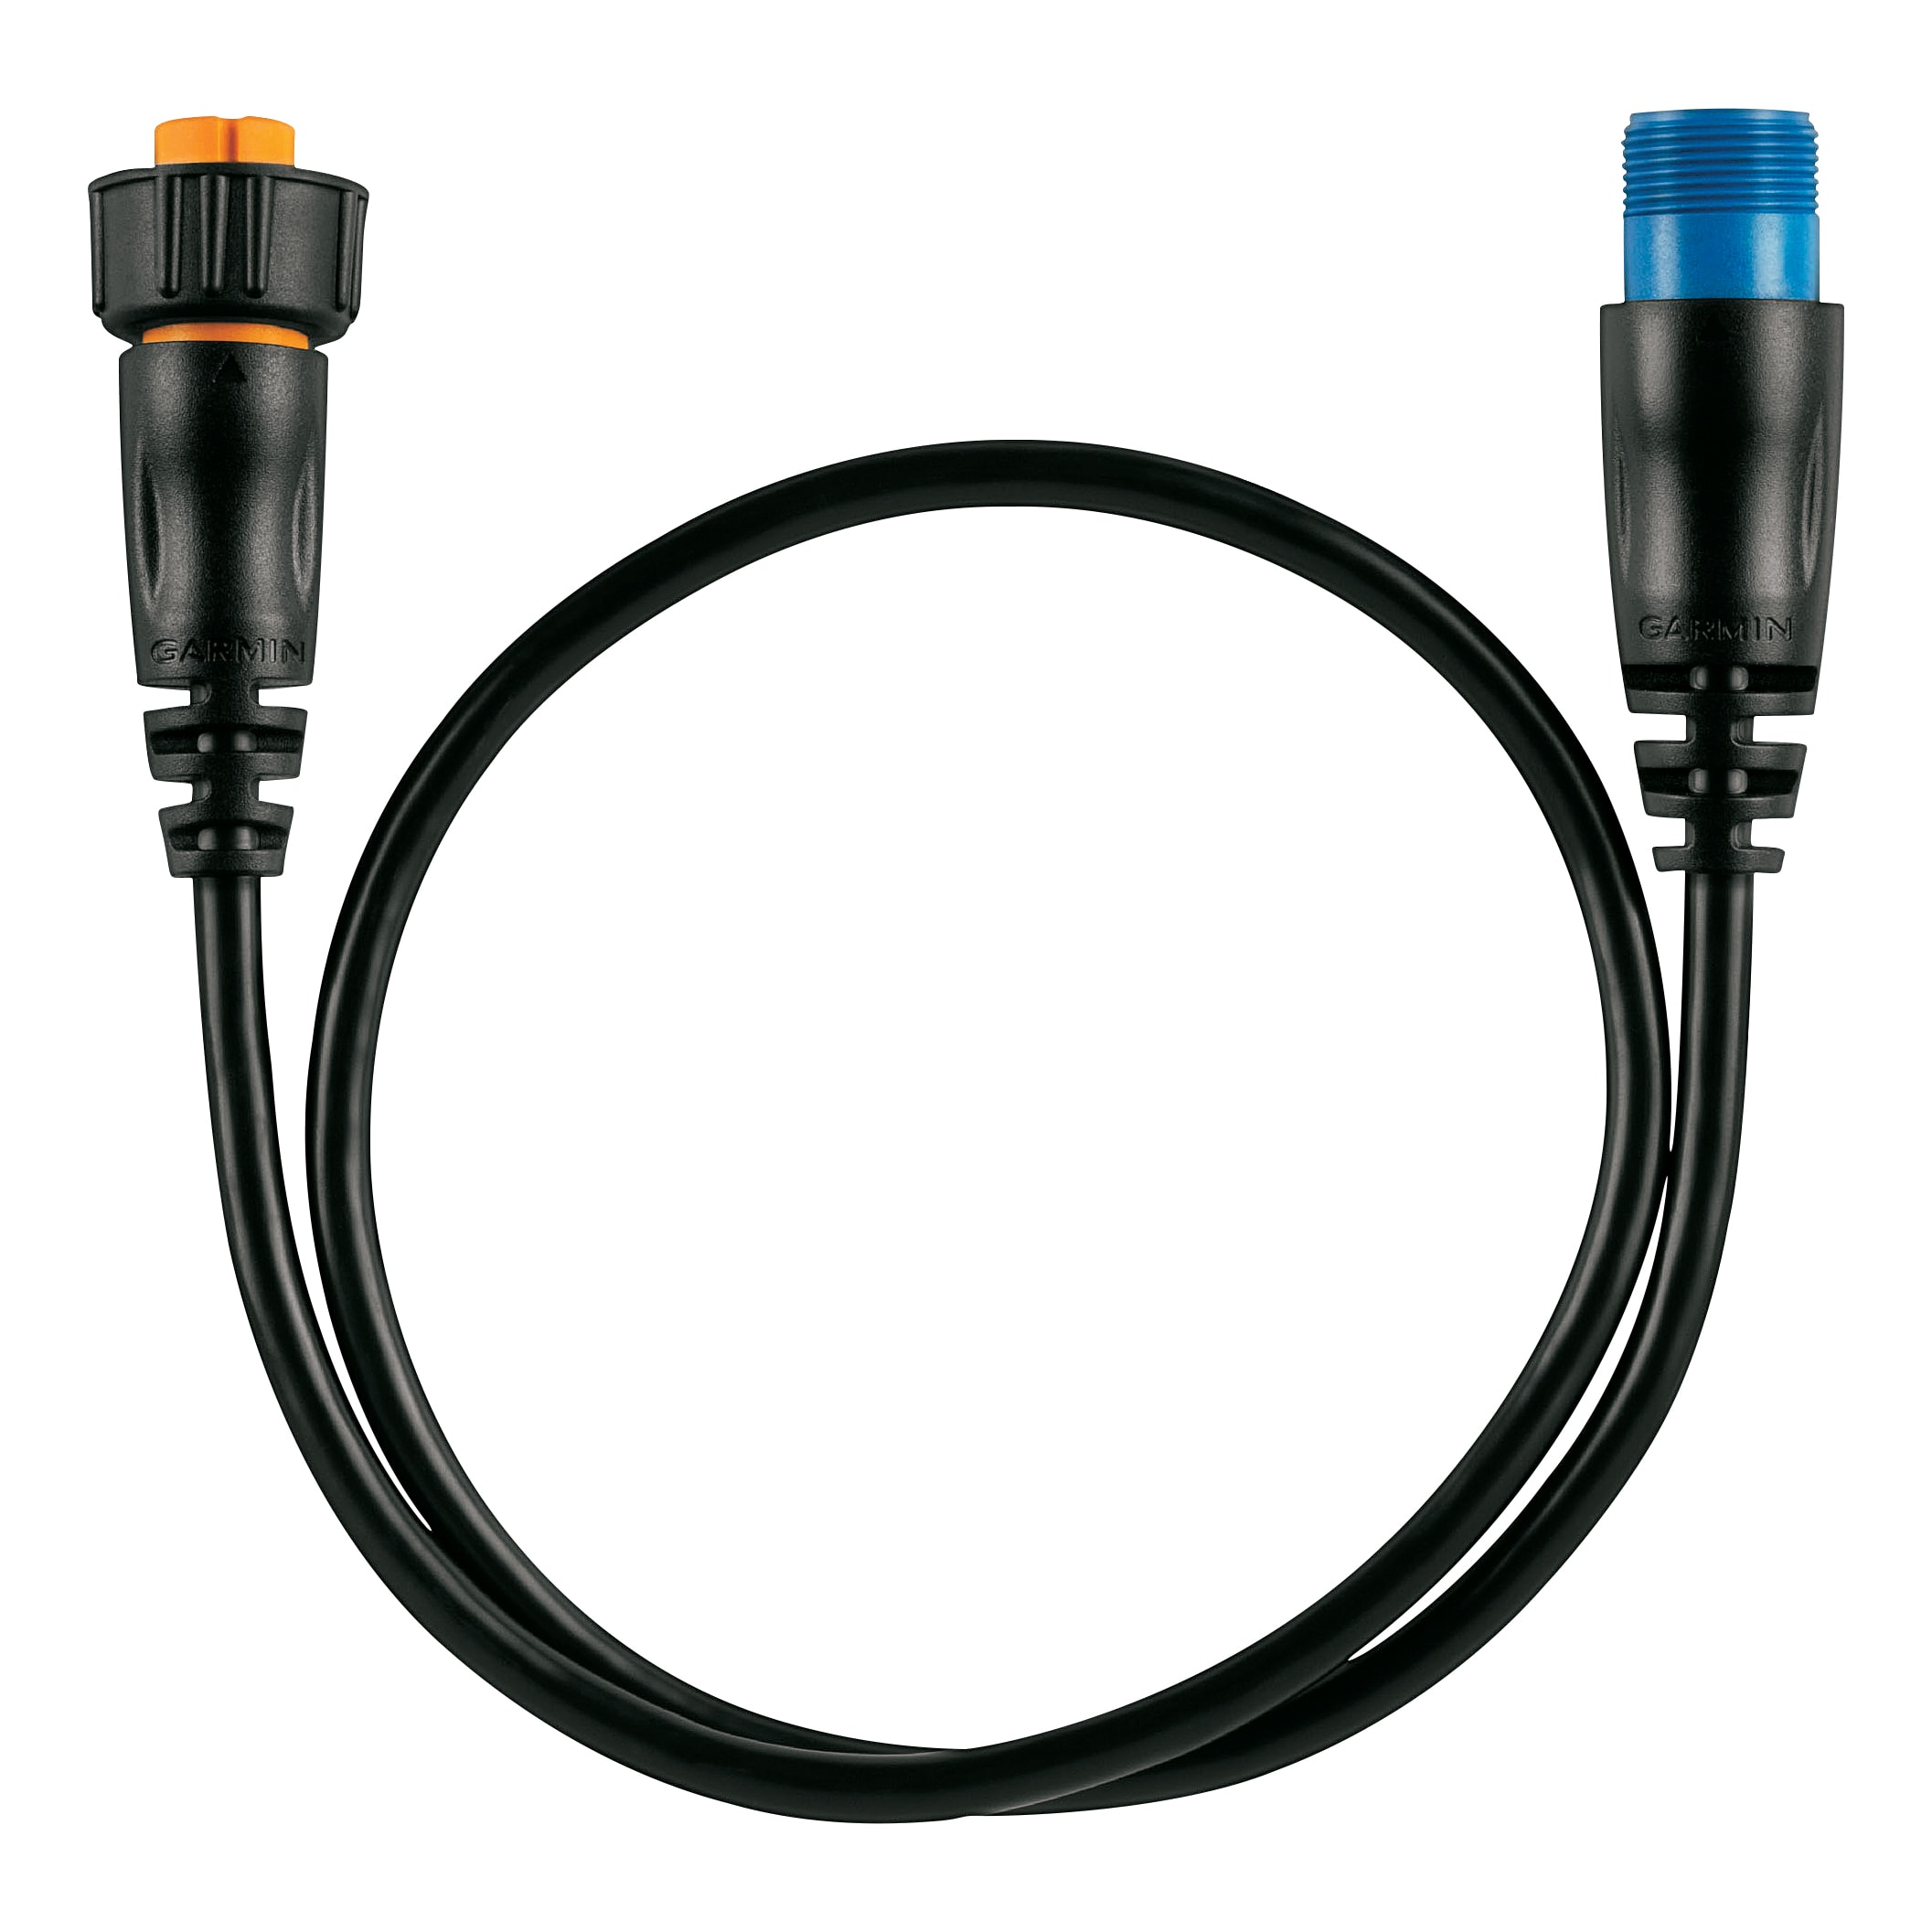 Garmin® 8-Pin to 12-Pin Adapter Cable